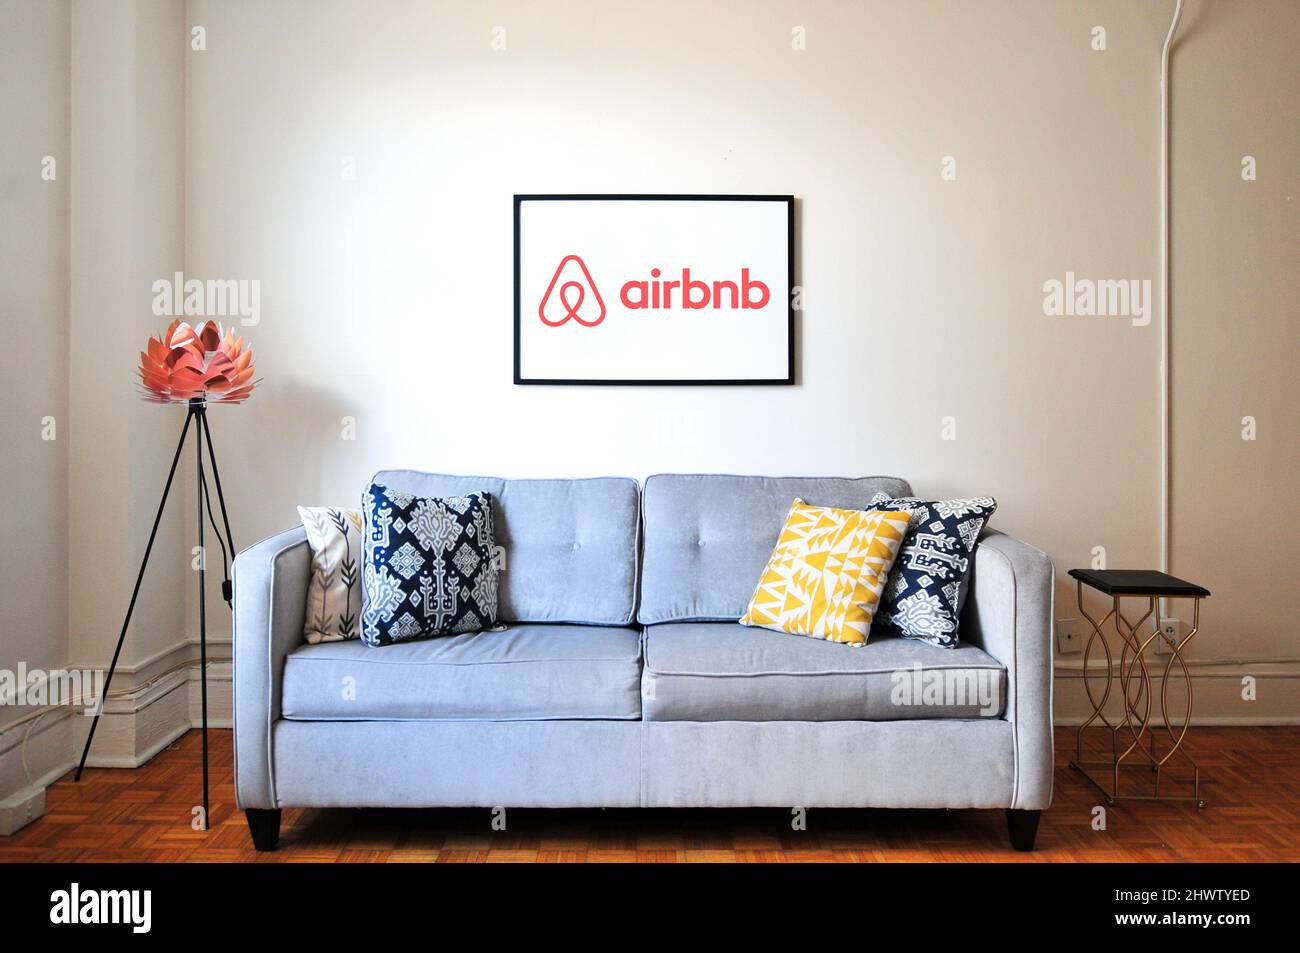 Airbnb-Logo auf Canva Stockfoto